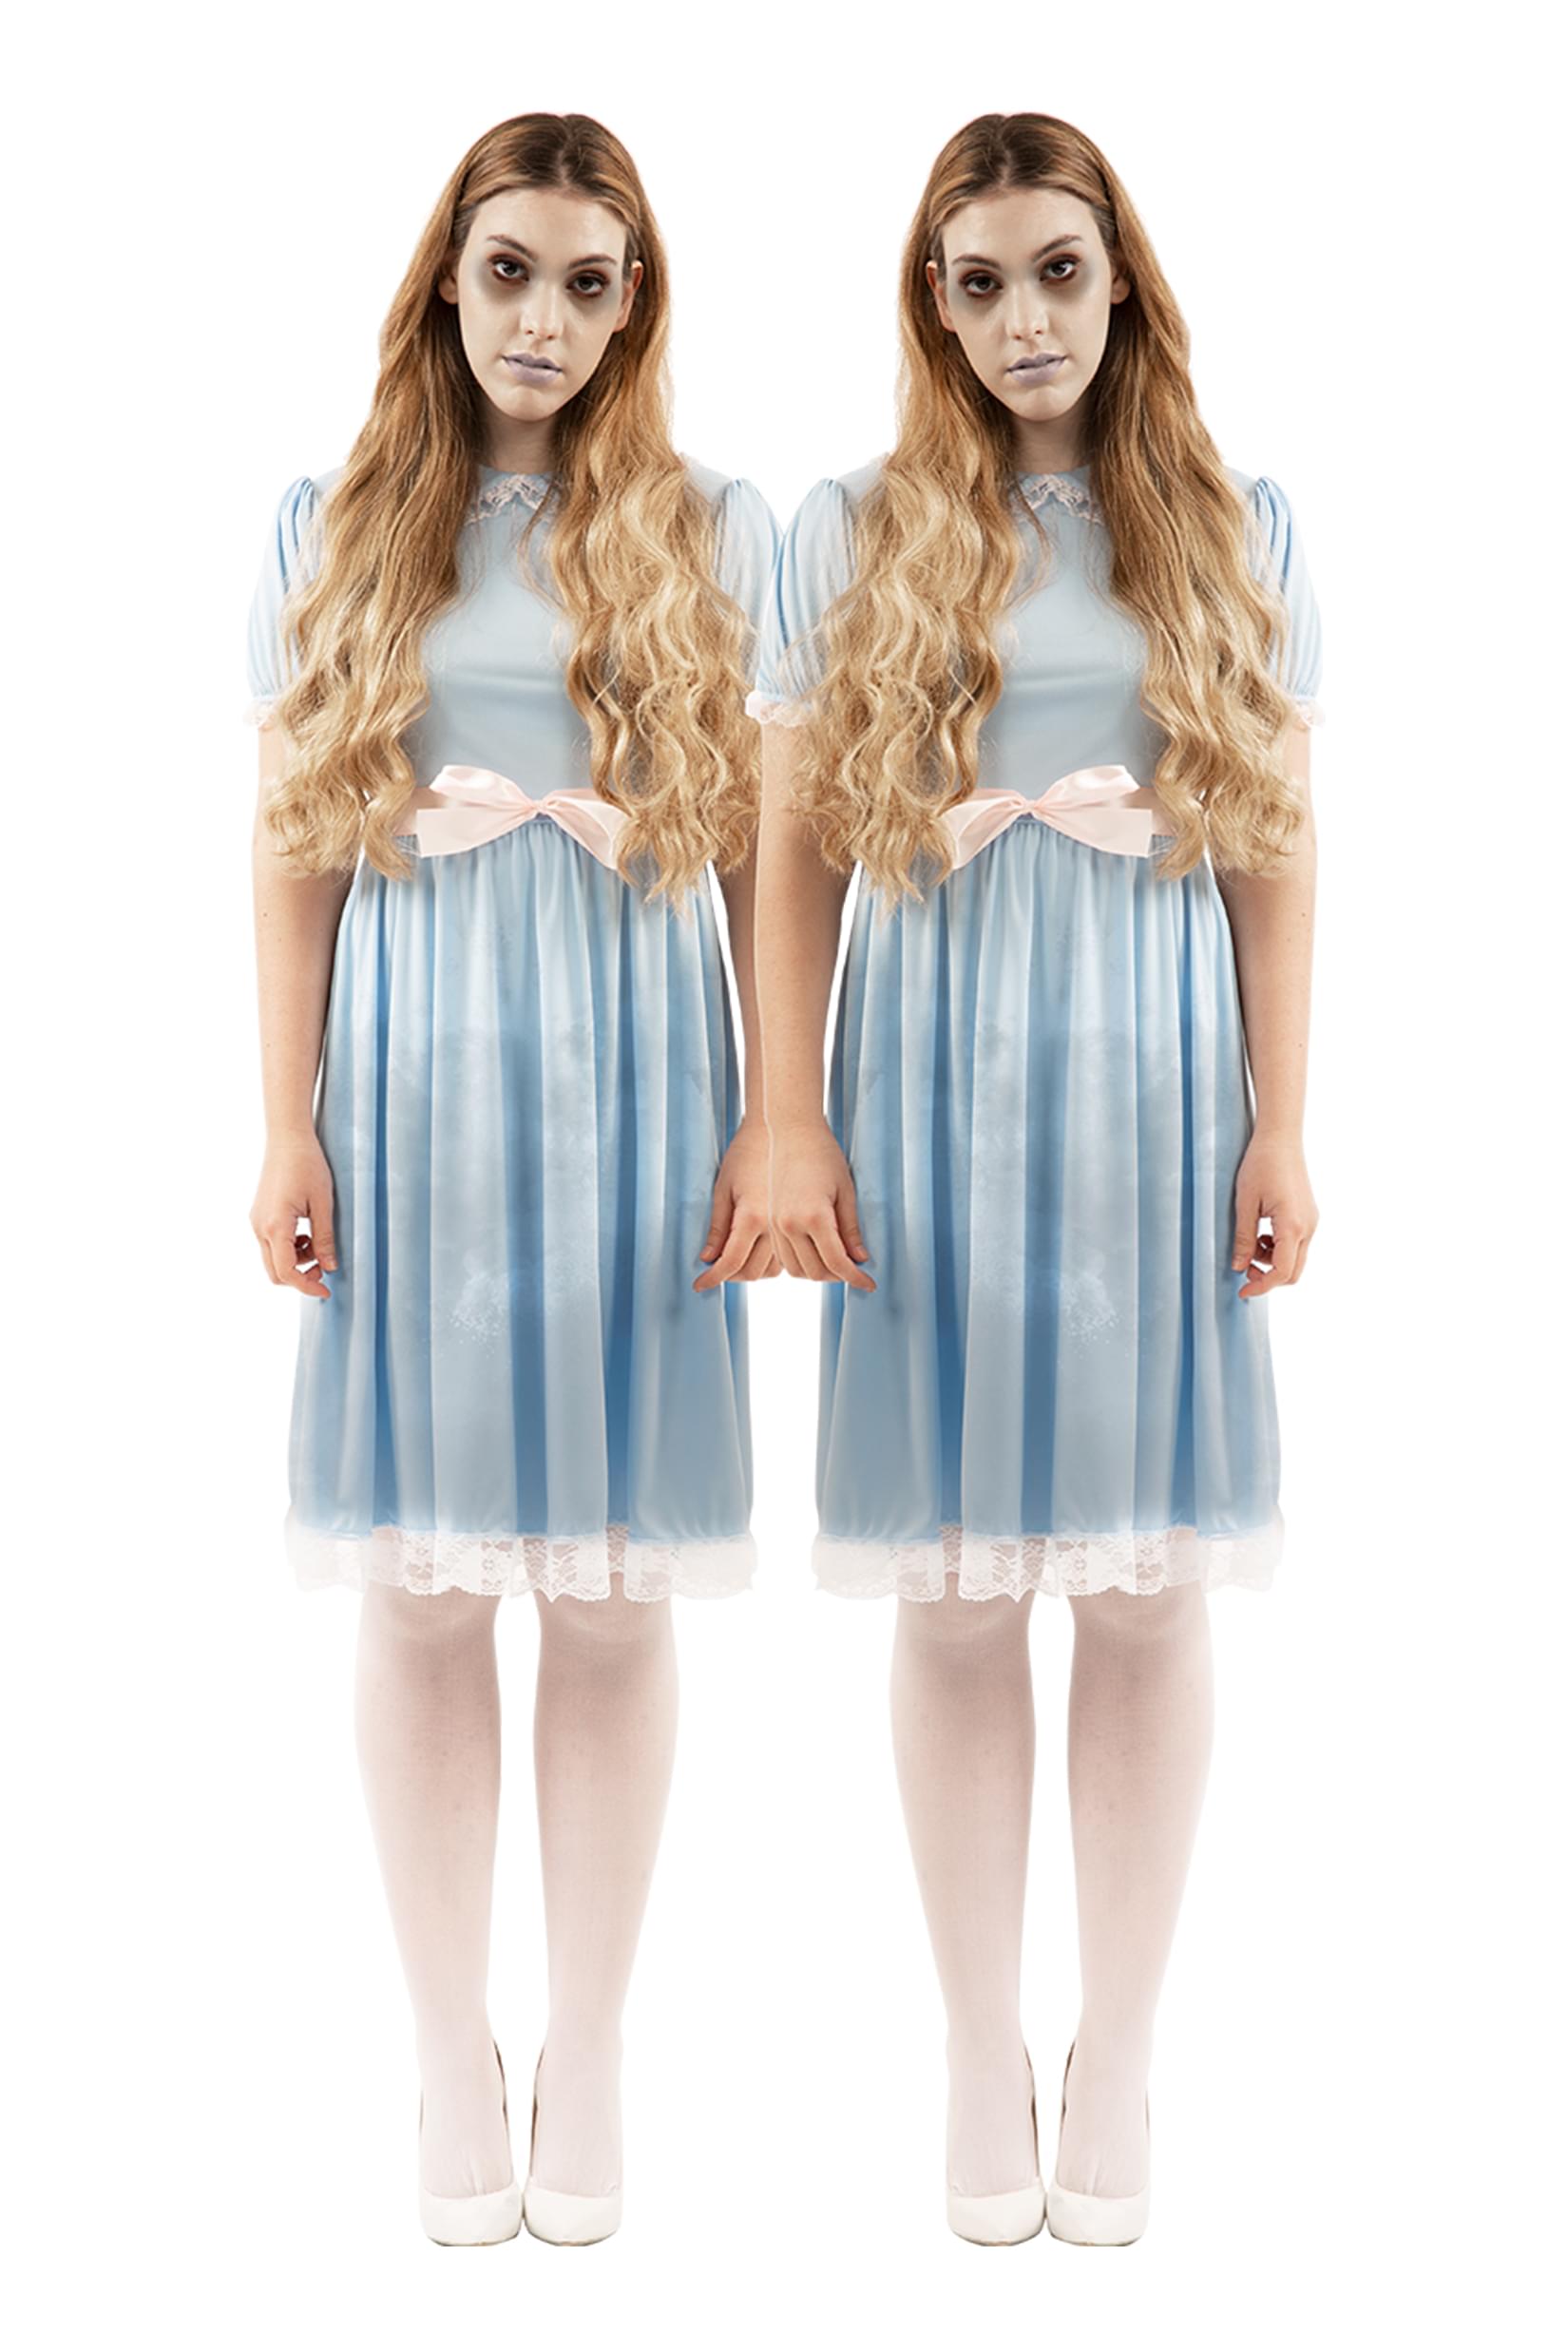 Halloween Costume The Shining Lisa & Louise Grady Twins Blue Dress  Adult / Kids